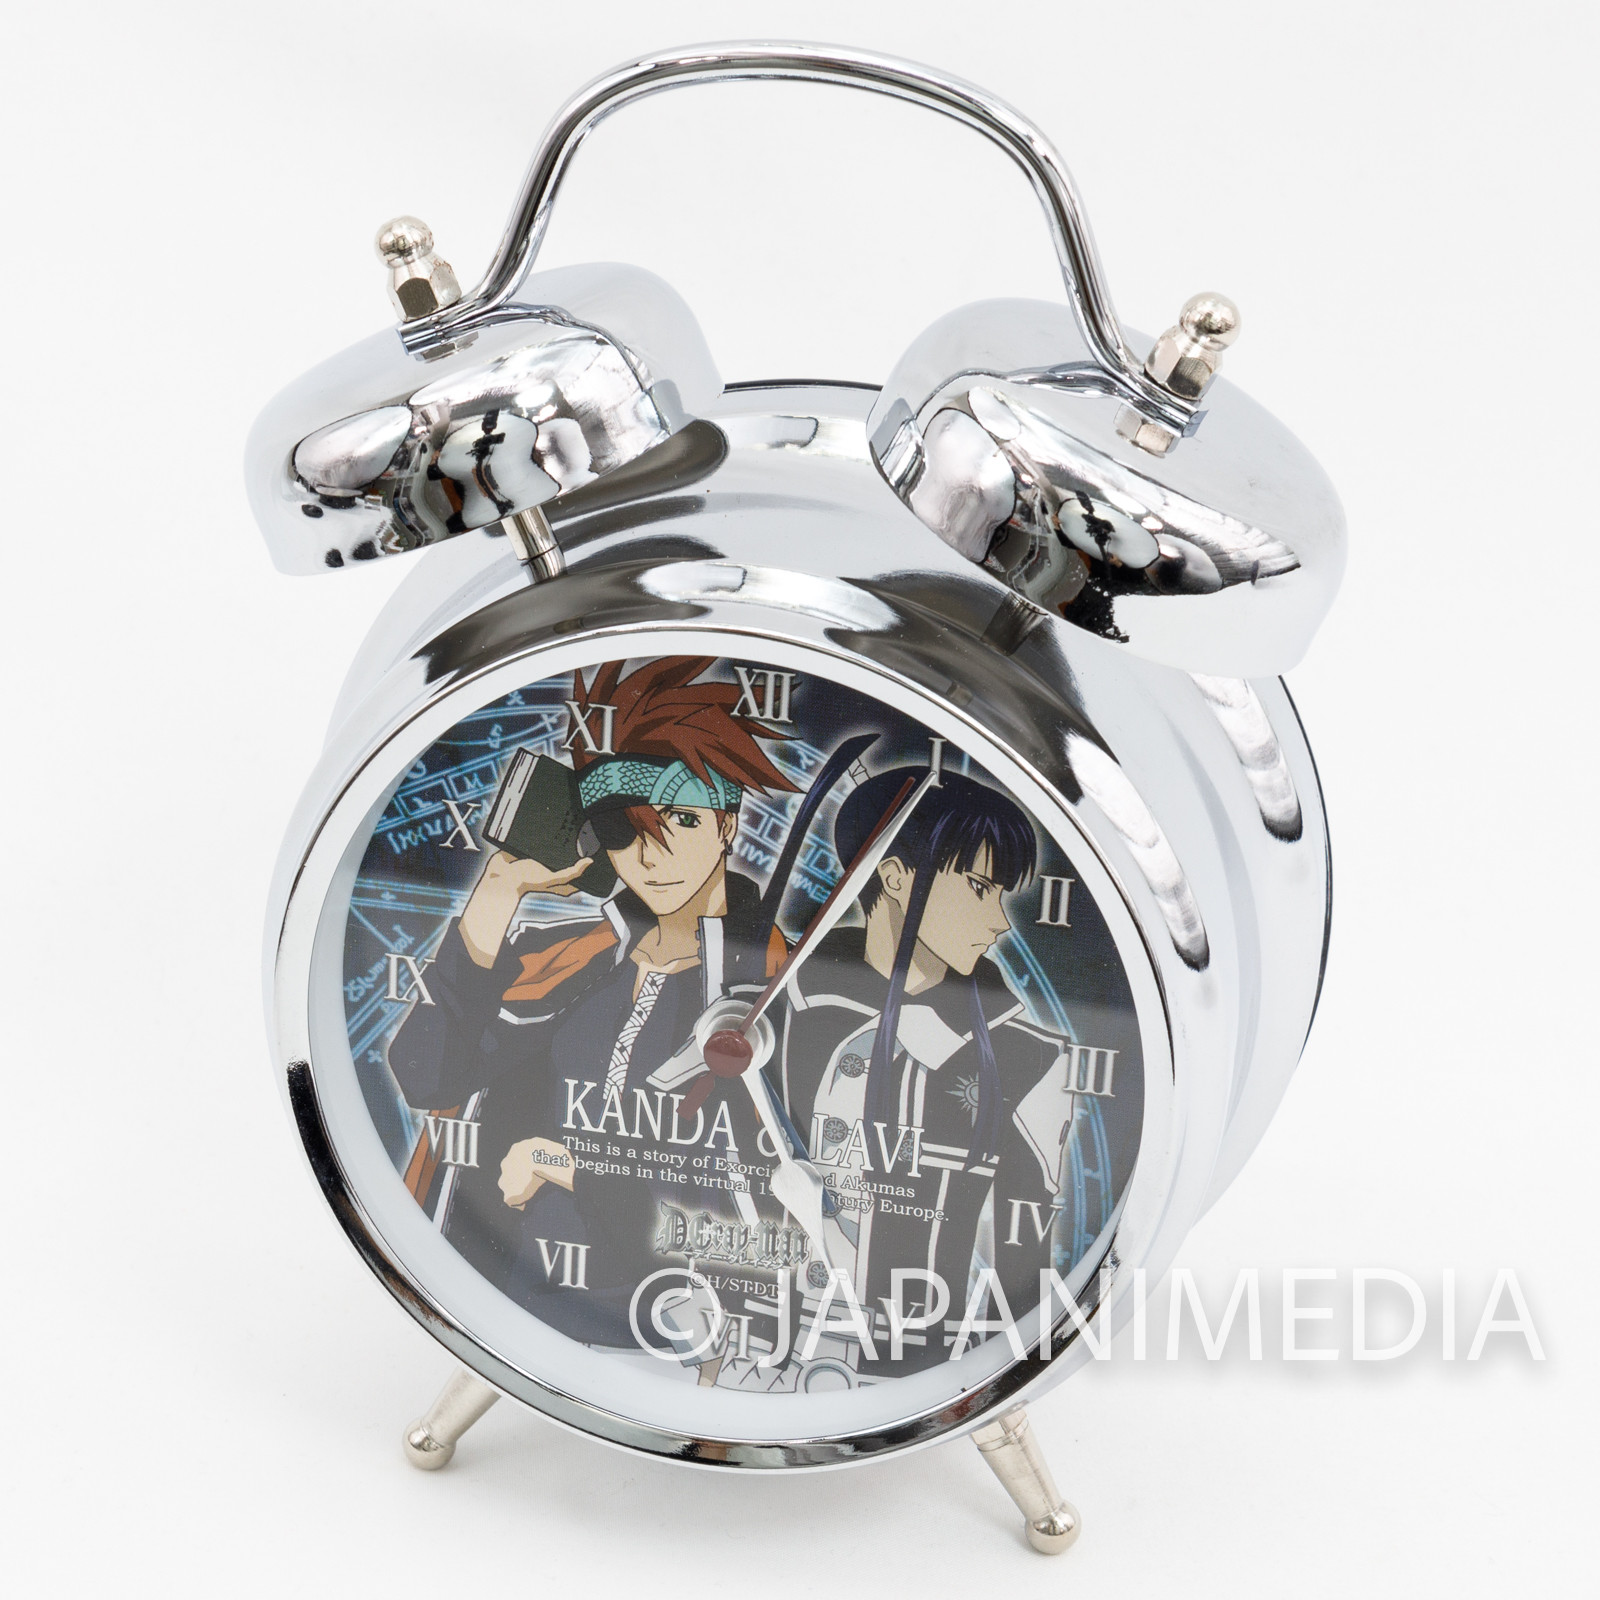 D.Gray-man Yu Kanda & Lavi Character Voice Alarm Clock JAPAN ANIME